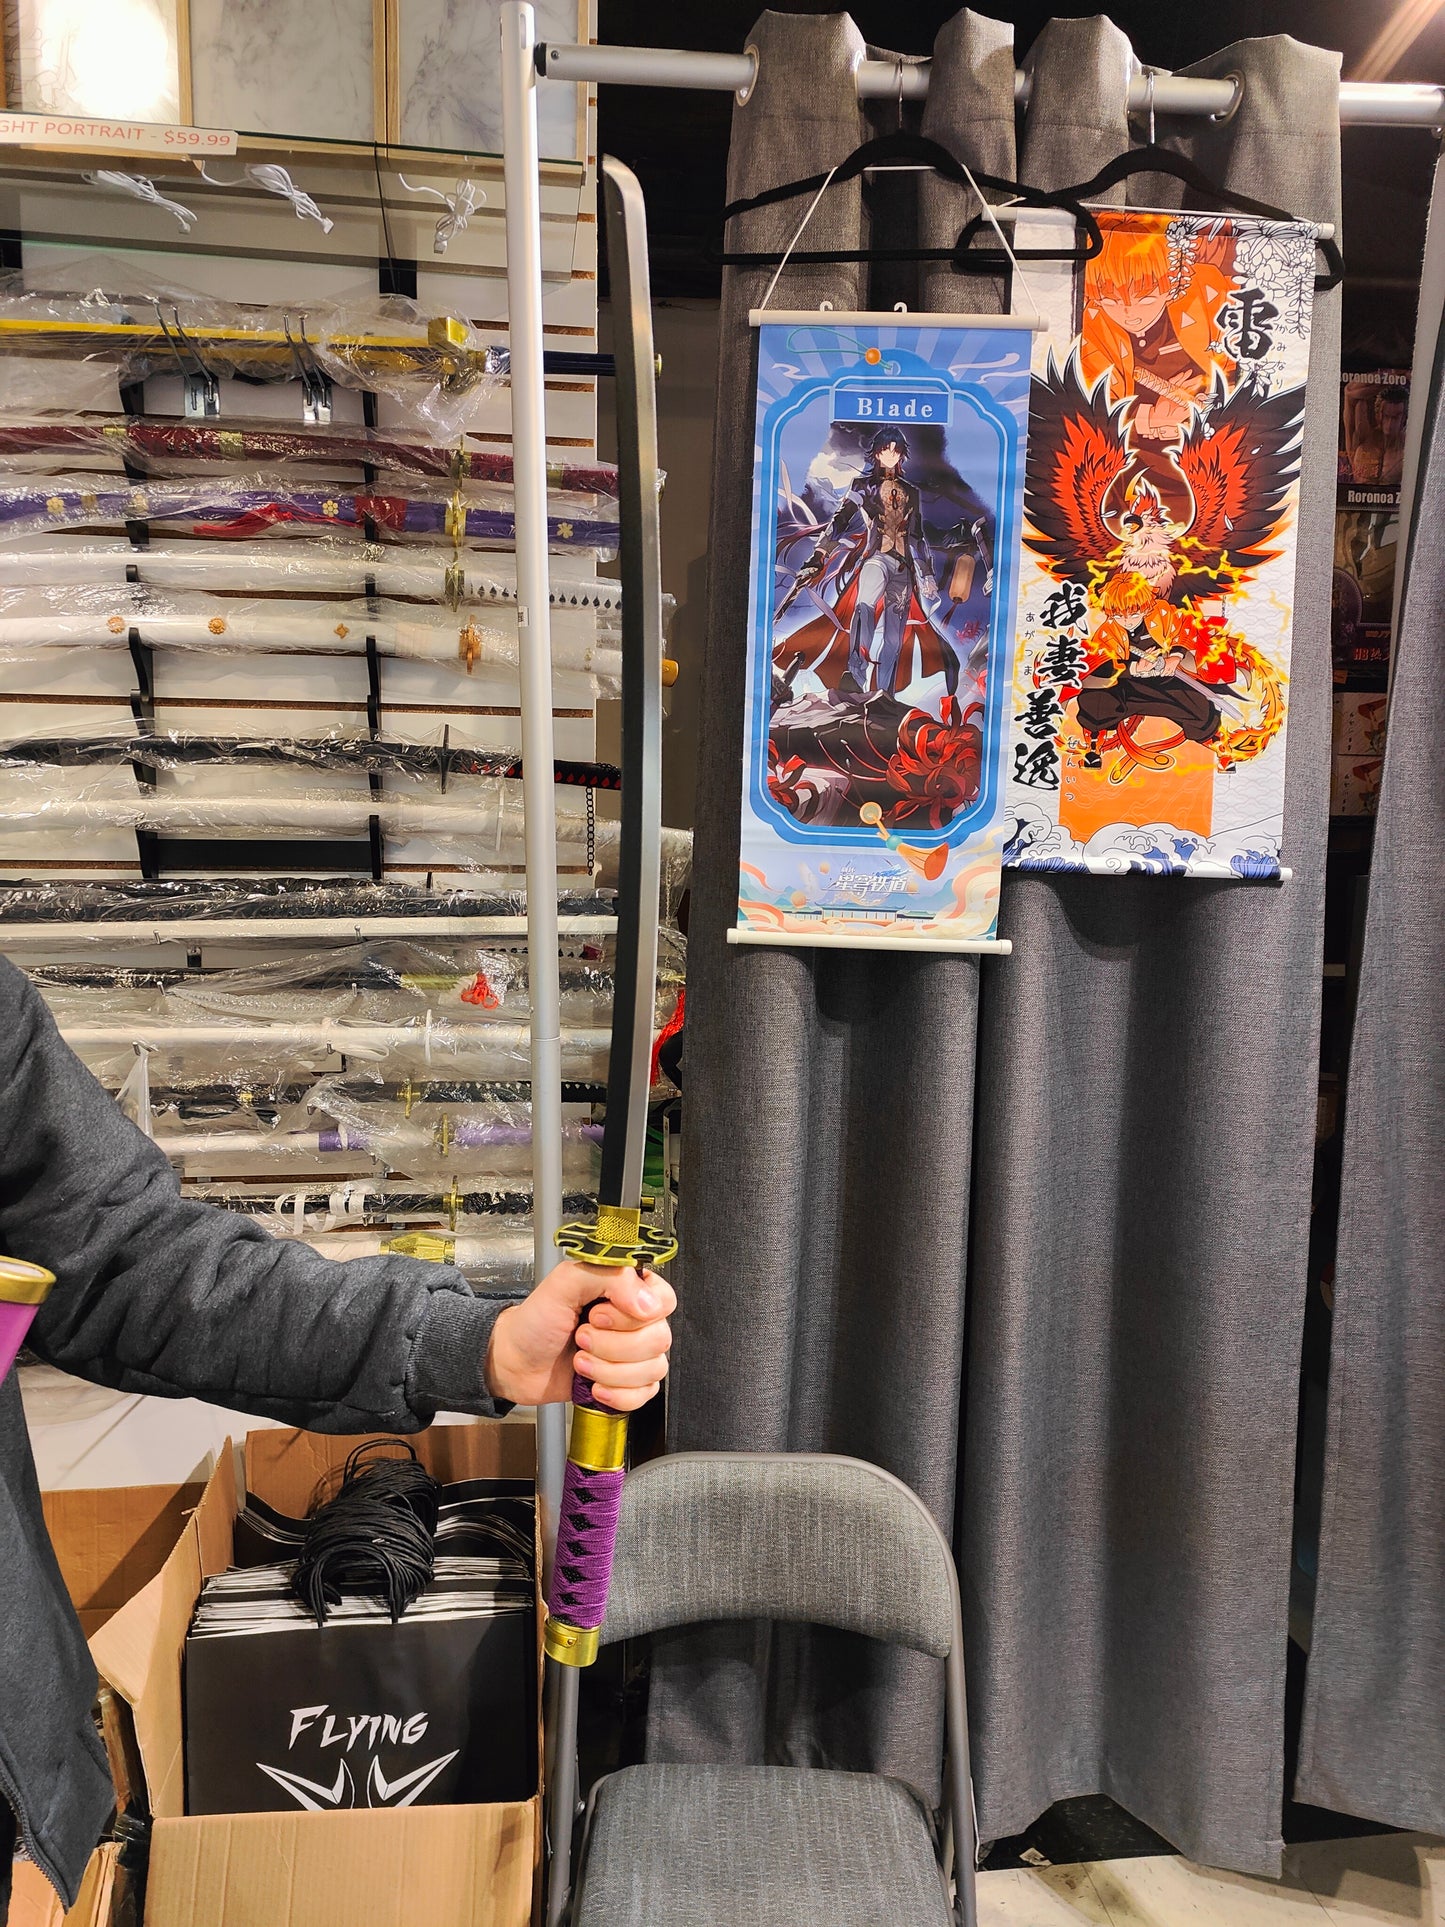 One Piece - Nidai Kitetsu Sword (Price Doe Not Include Shipping)